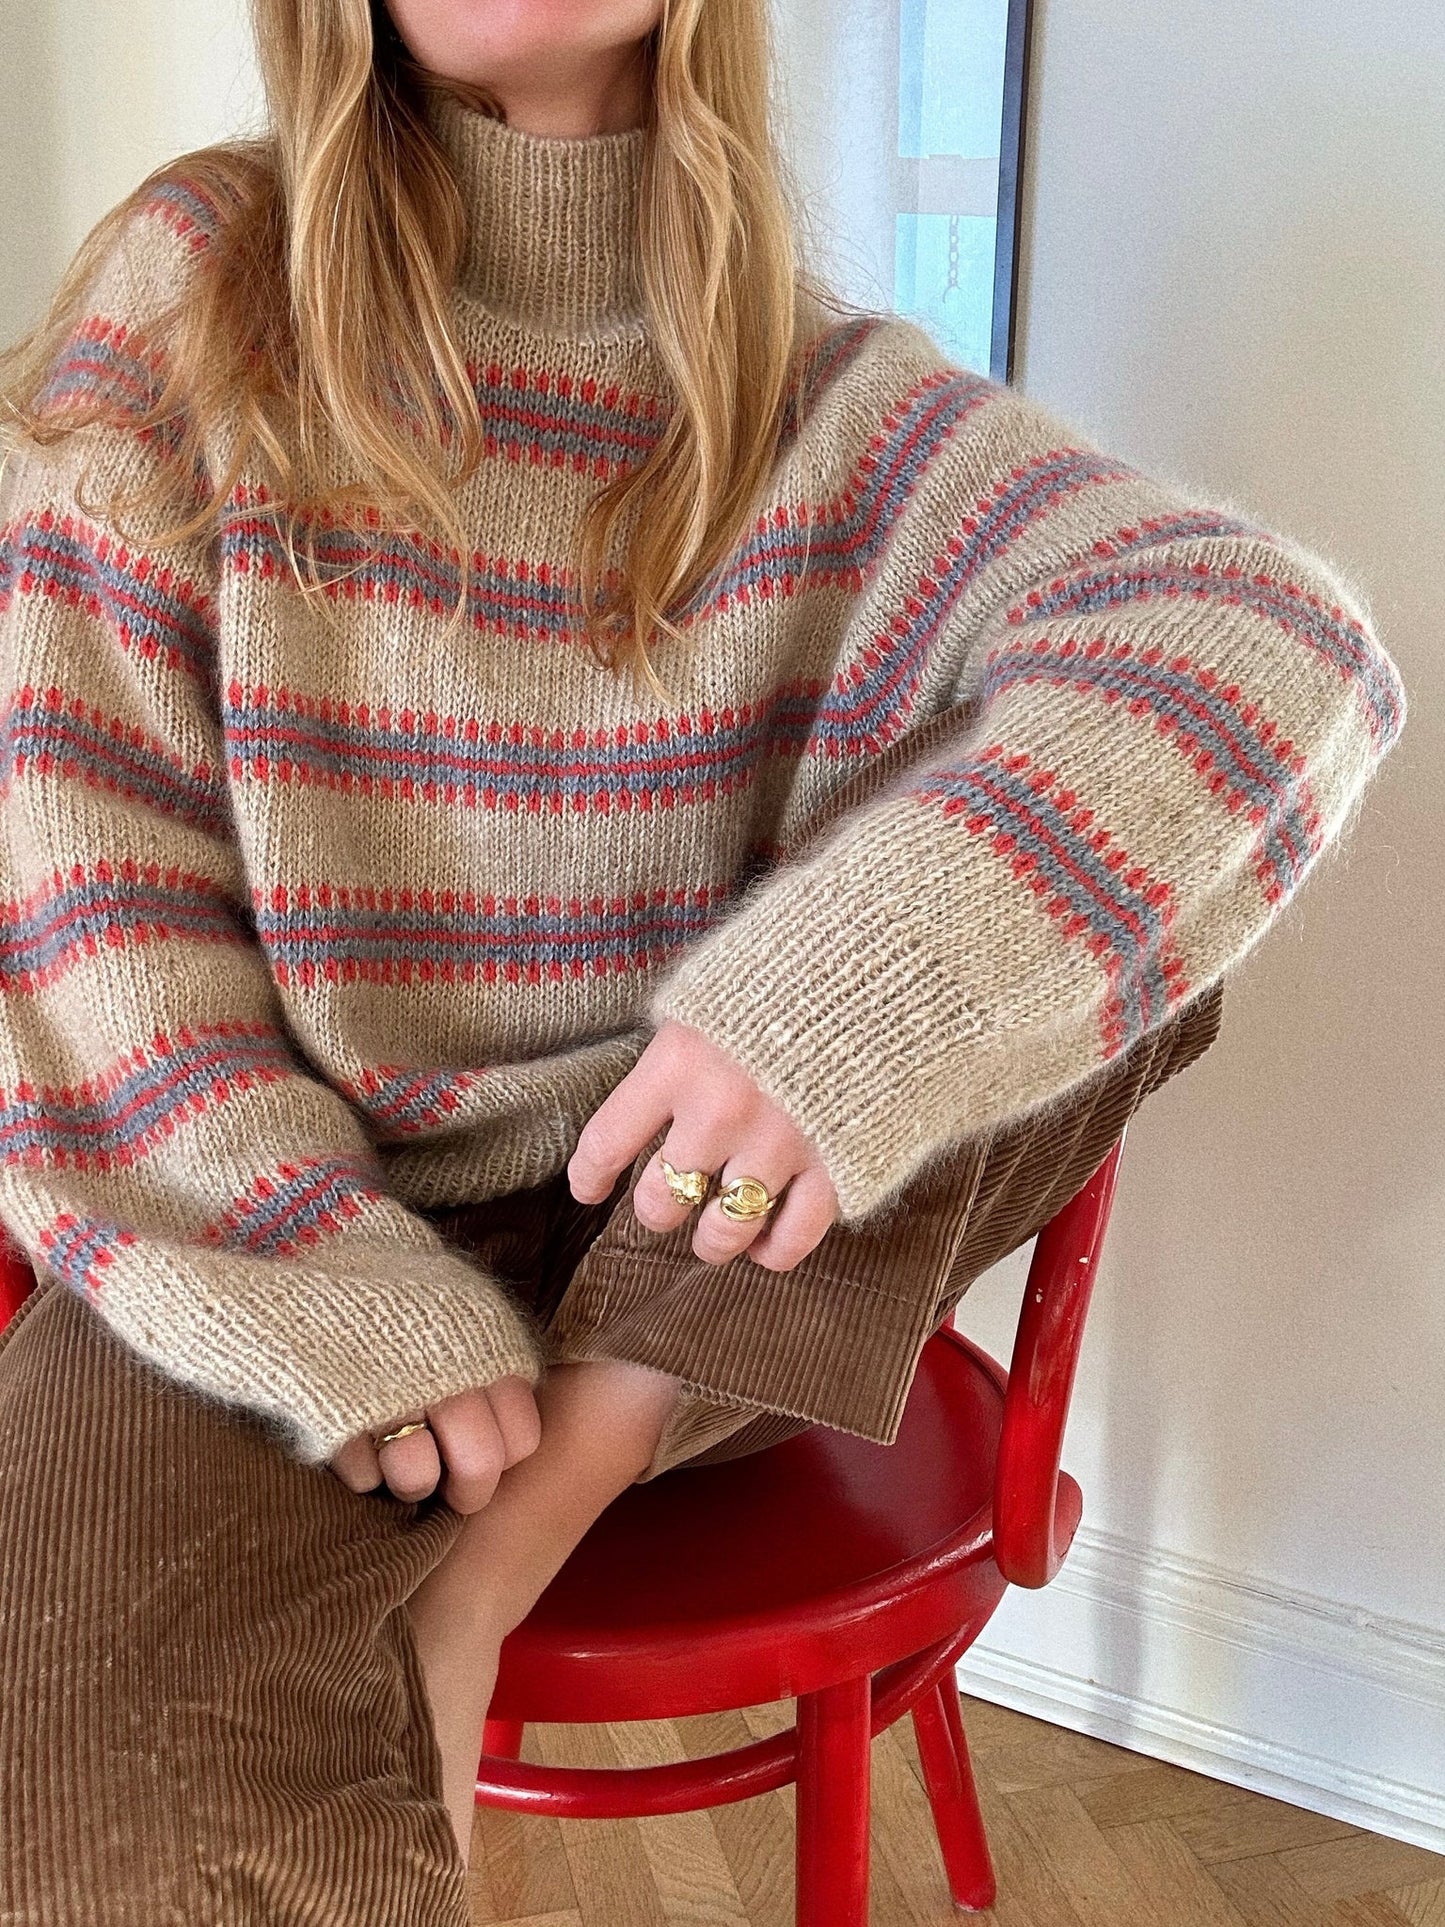 Garnpakke til Norma Sweater af My Favourite Things Knitwear - Isager Archives kollektion